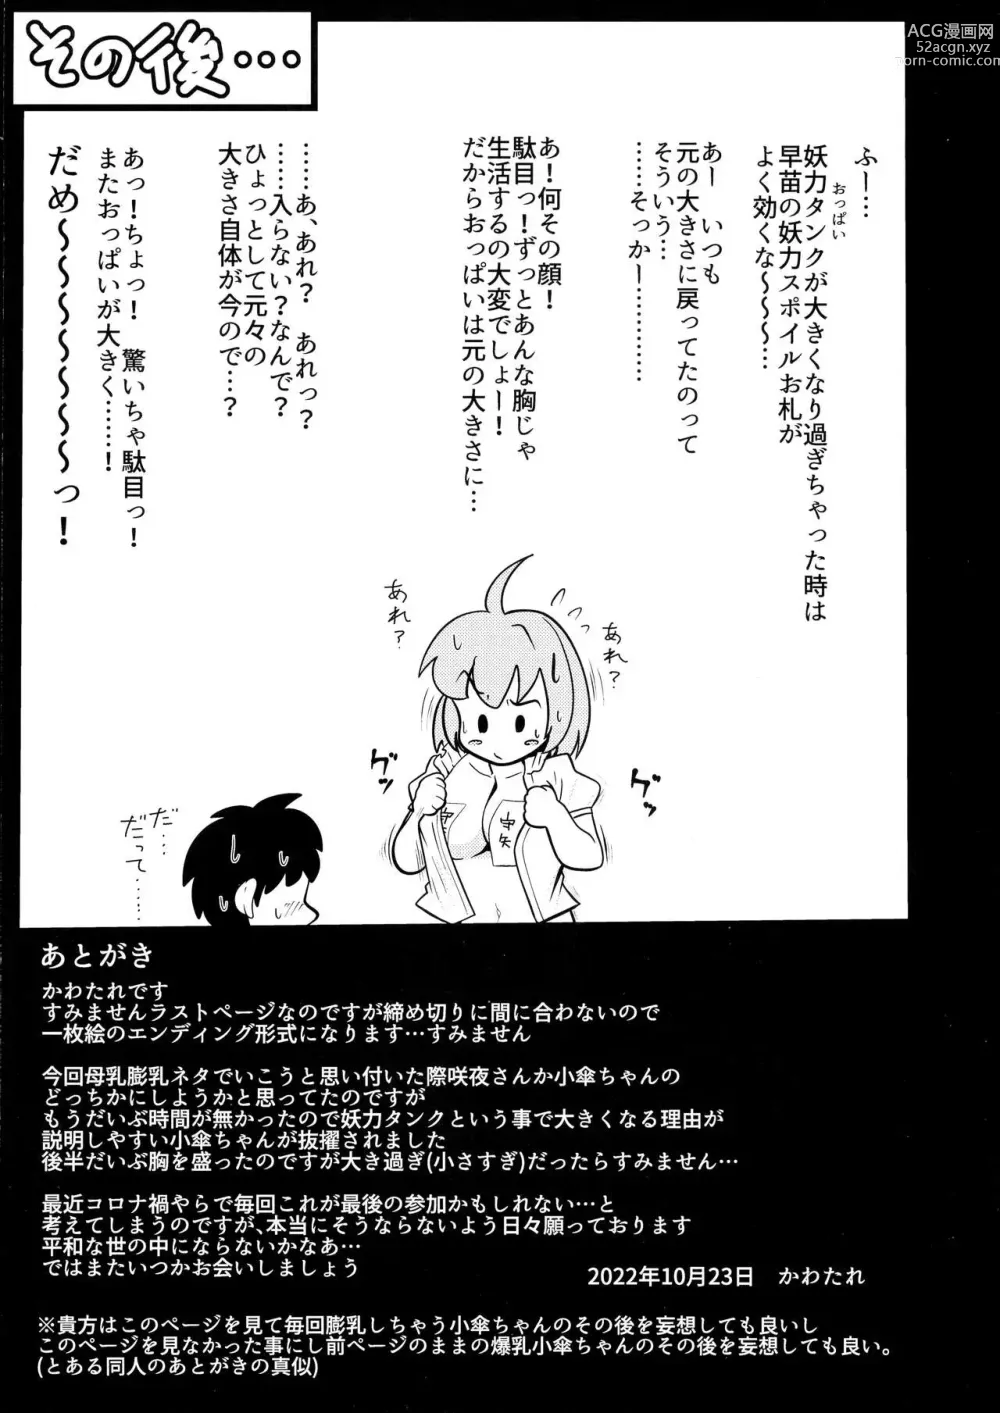 Page 18 of doujinshi Wachiki wa Bonyuu de Bonyuu Youkai 2 Kyoui de Kei ina Kyoui no Tatara Sensei!